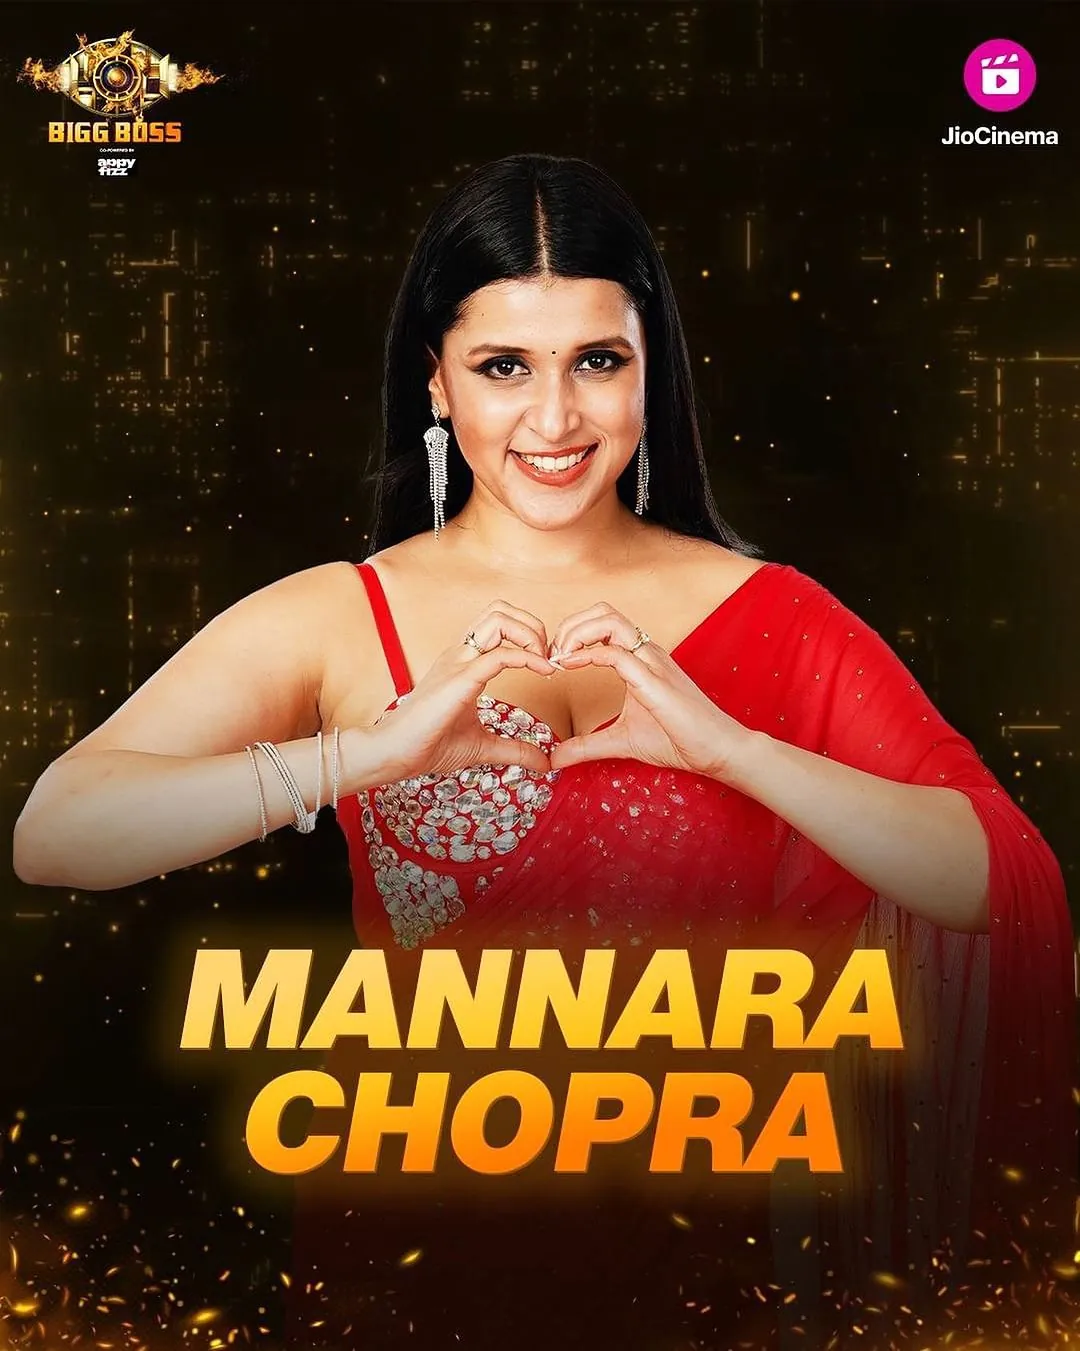 Mannara Chopra Career: From Modelling To Actress 